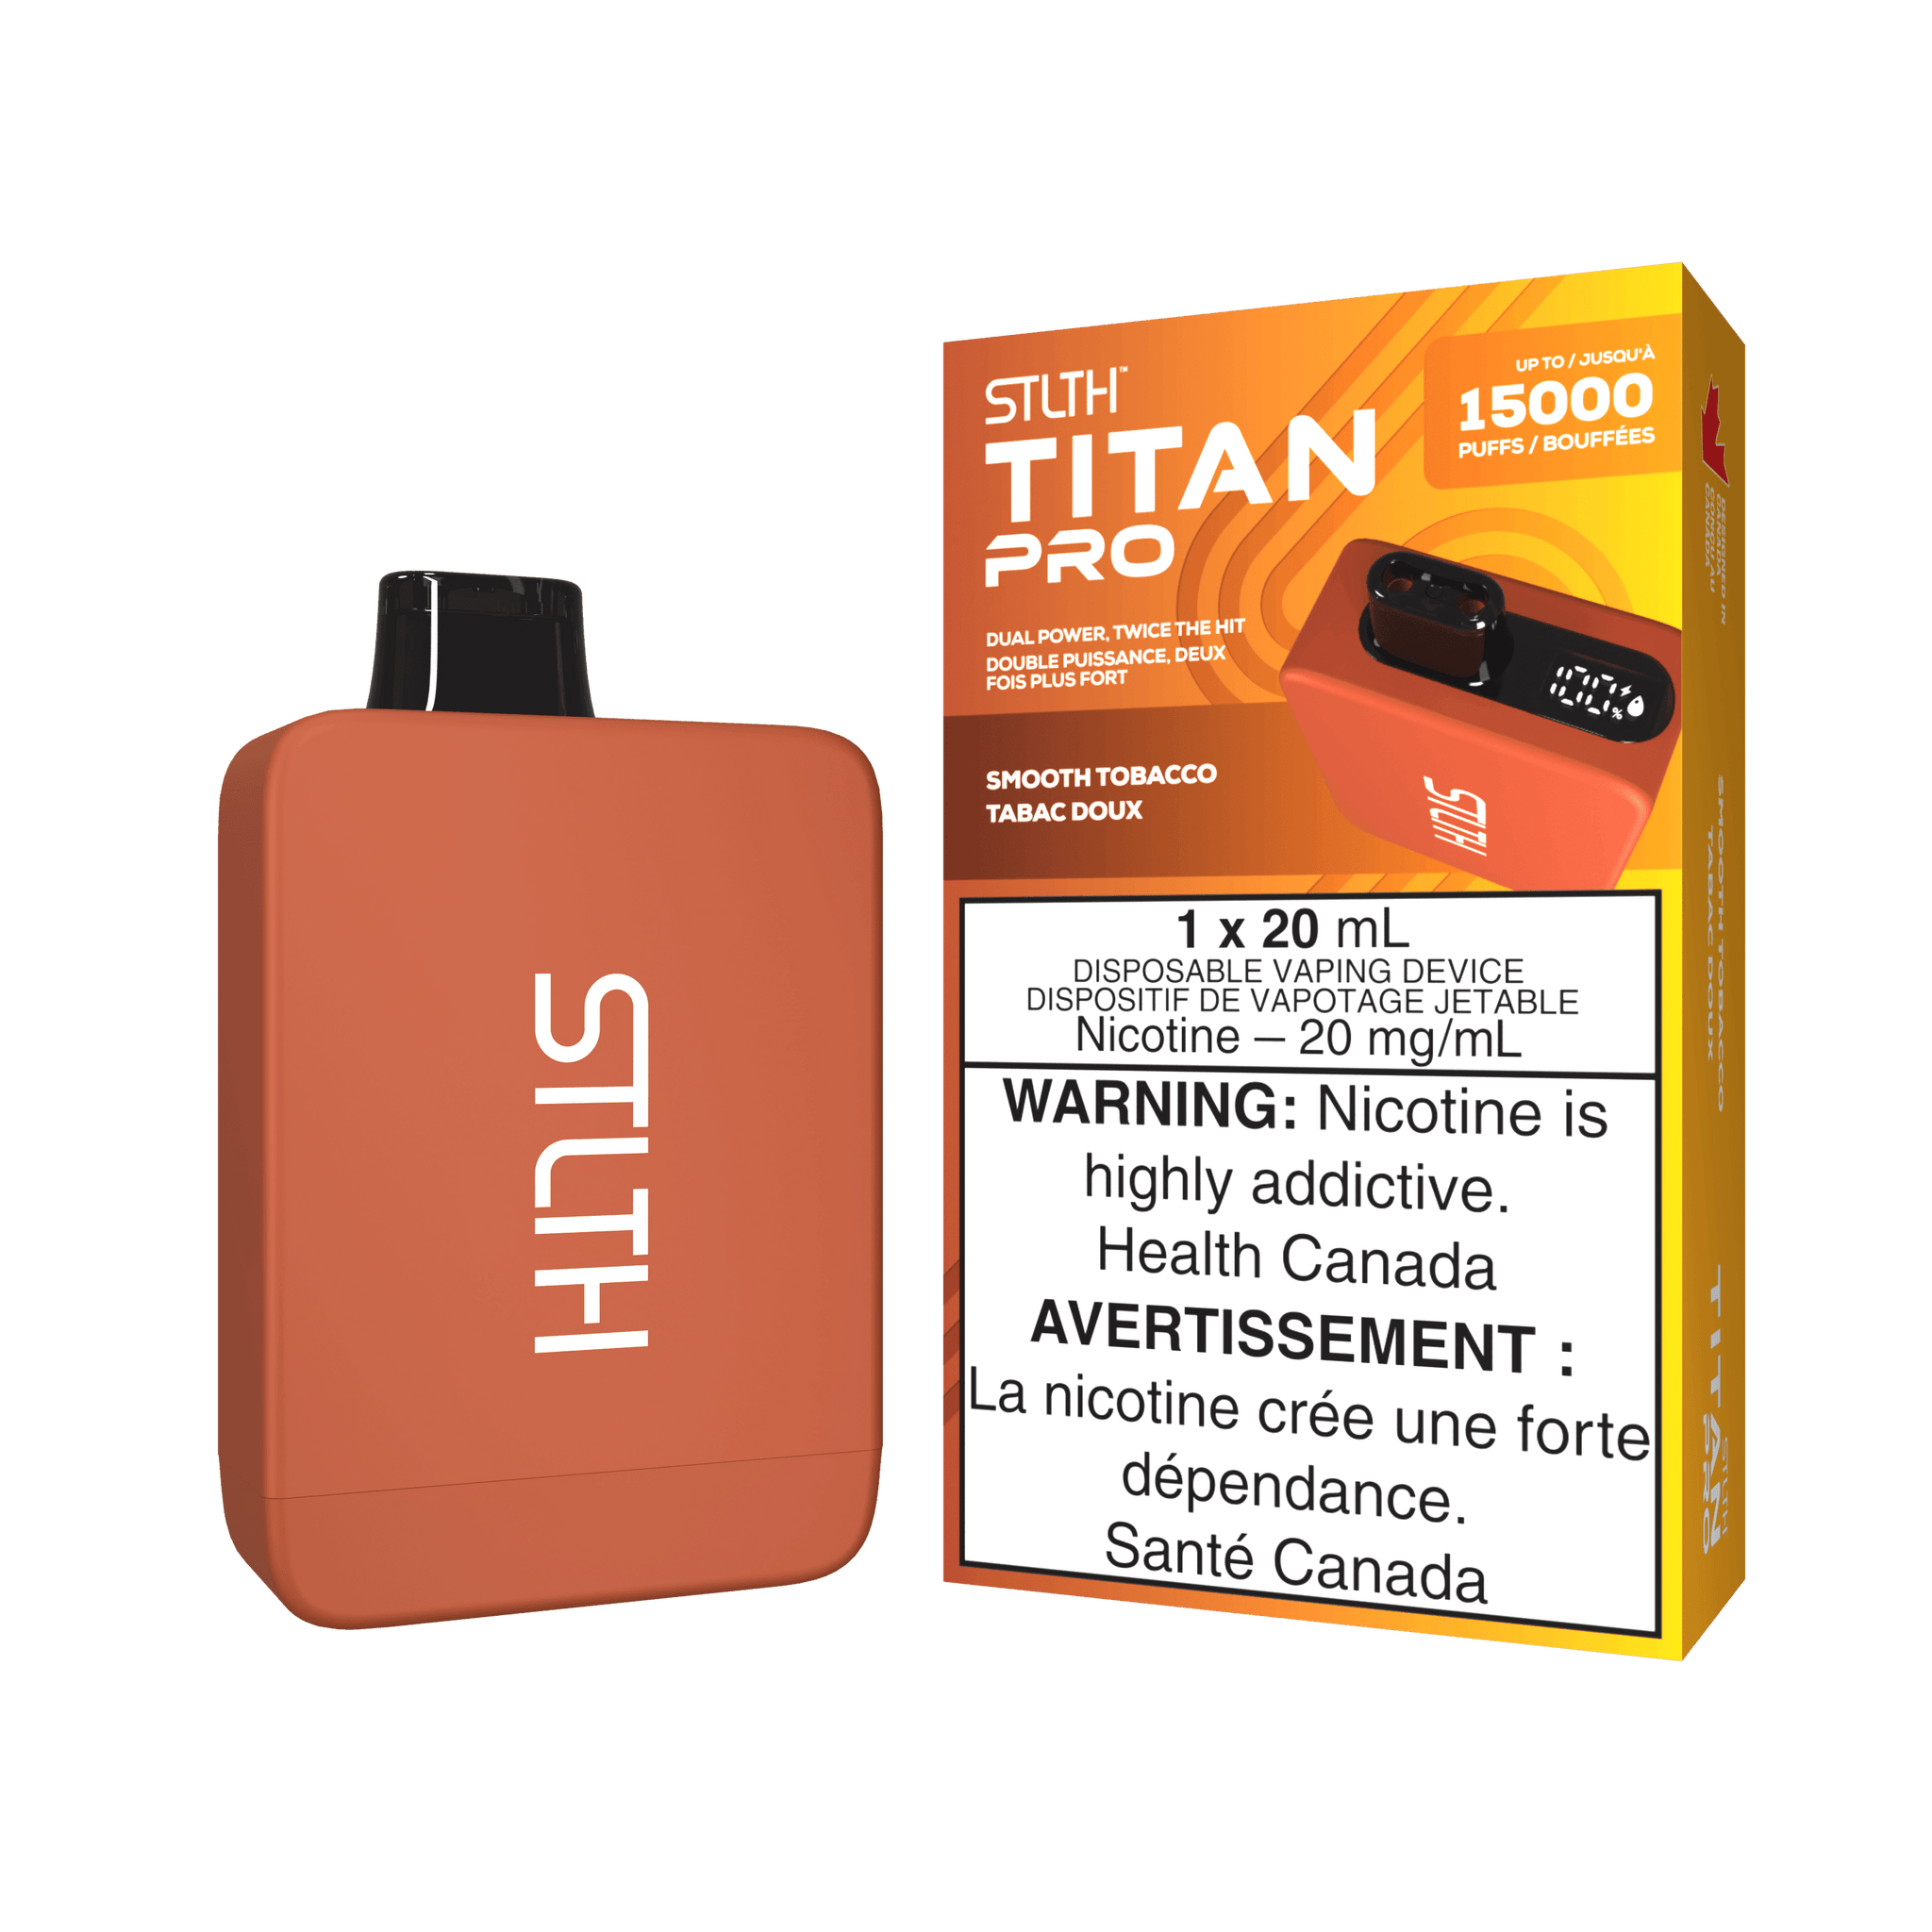 STLTH Titan Pro - Smooth Tobacco - Vapor Shoppe